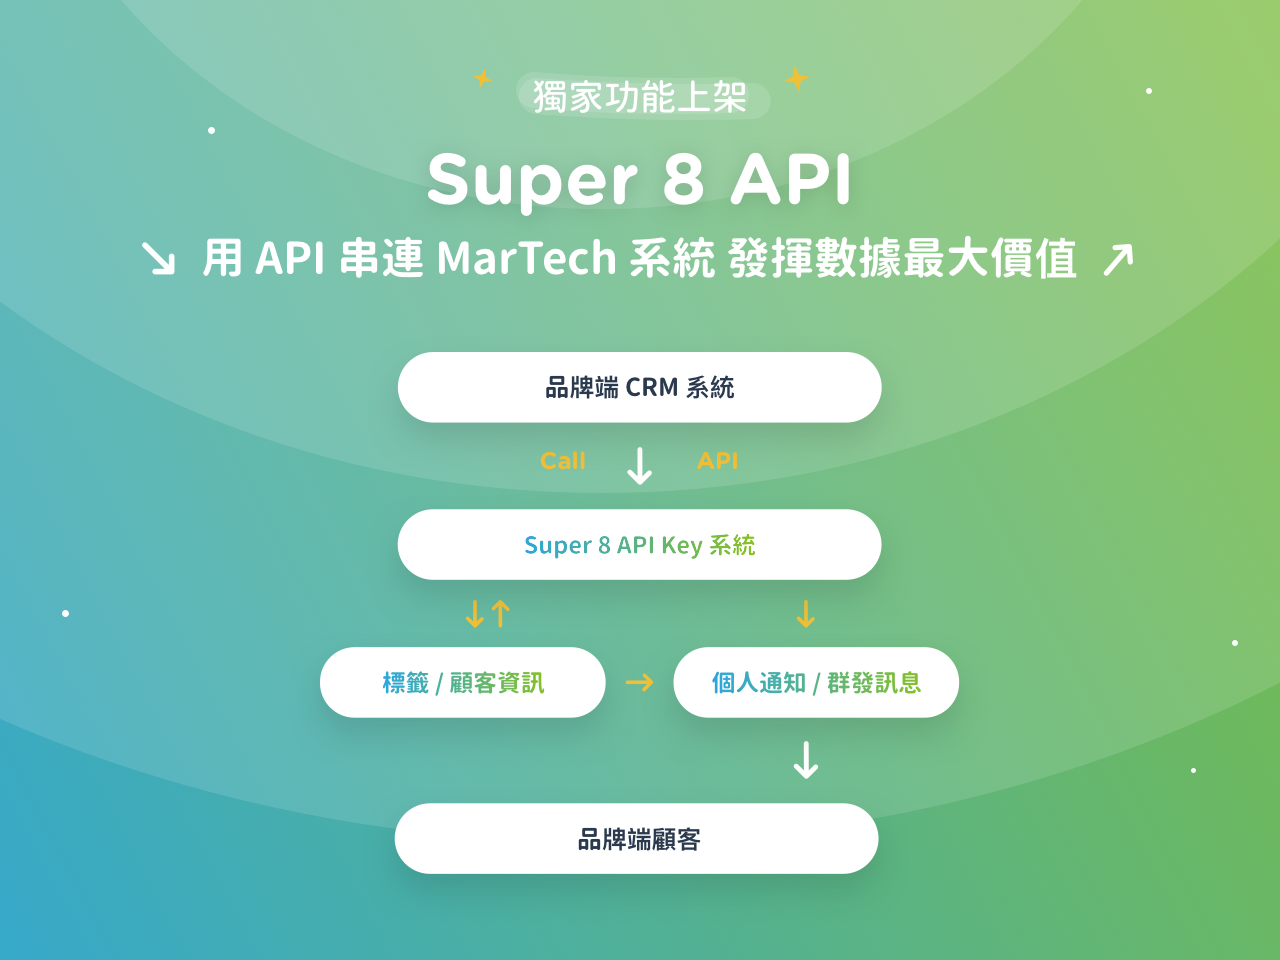 Super 8 API 串聯 CRM 系統架構